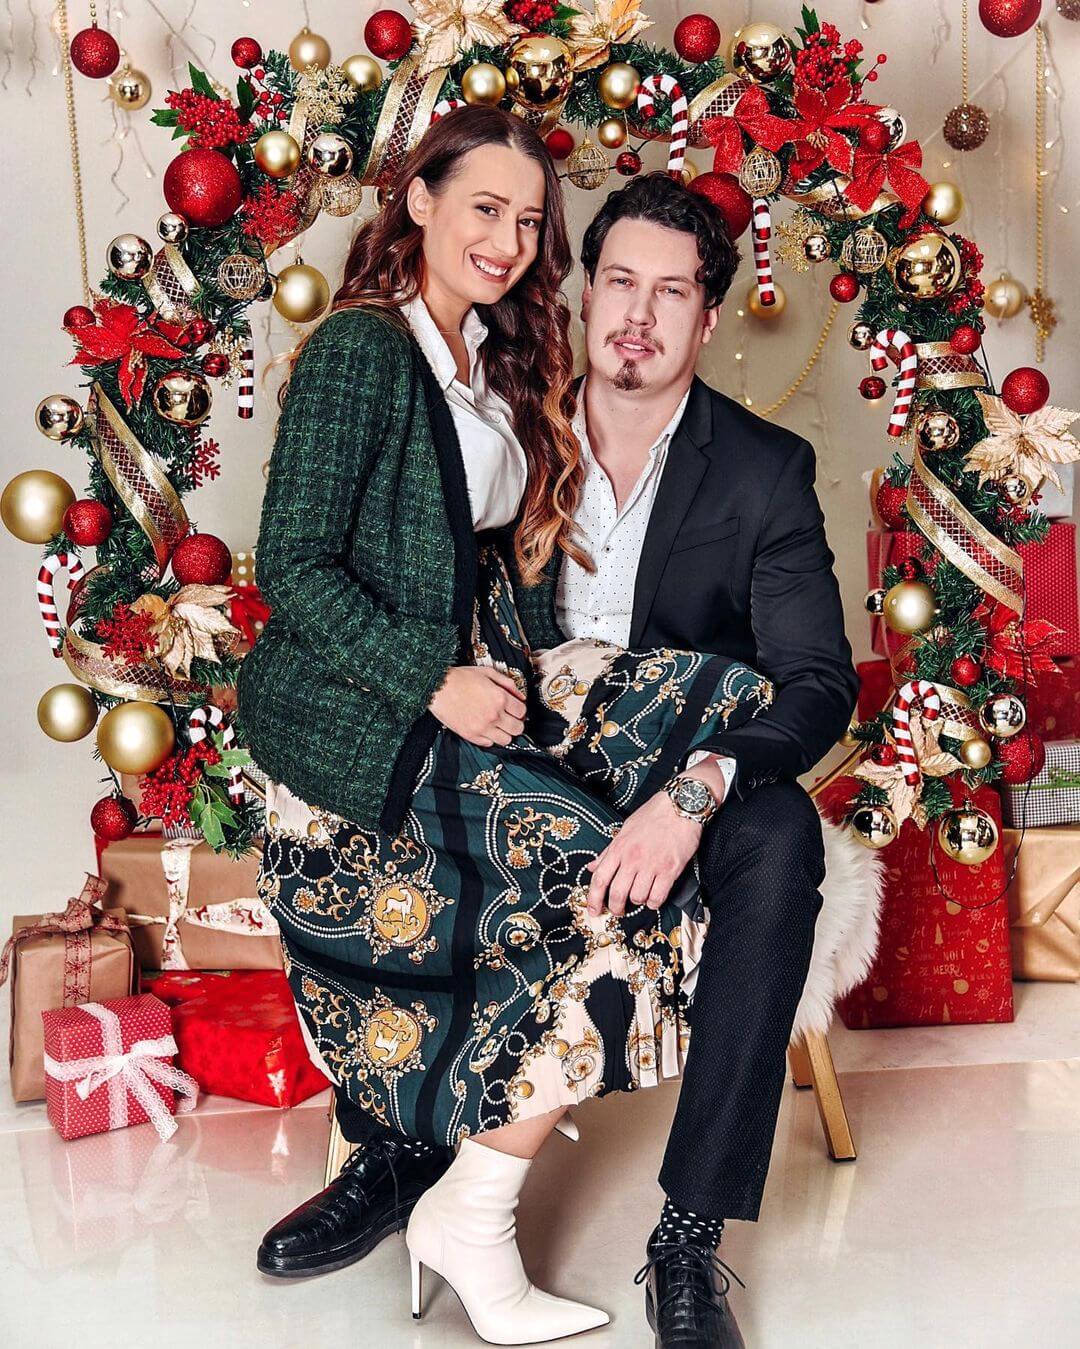 Classy Couple Christmas Photoshoot Ideas